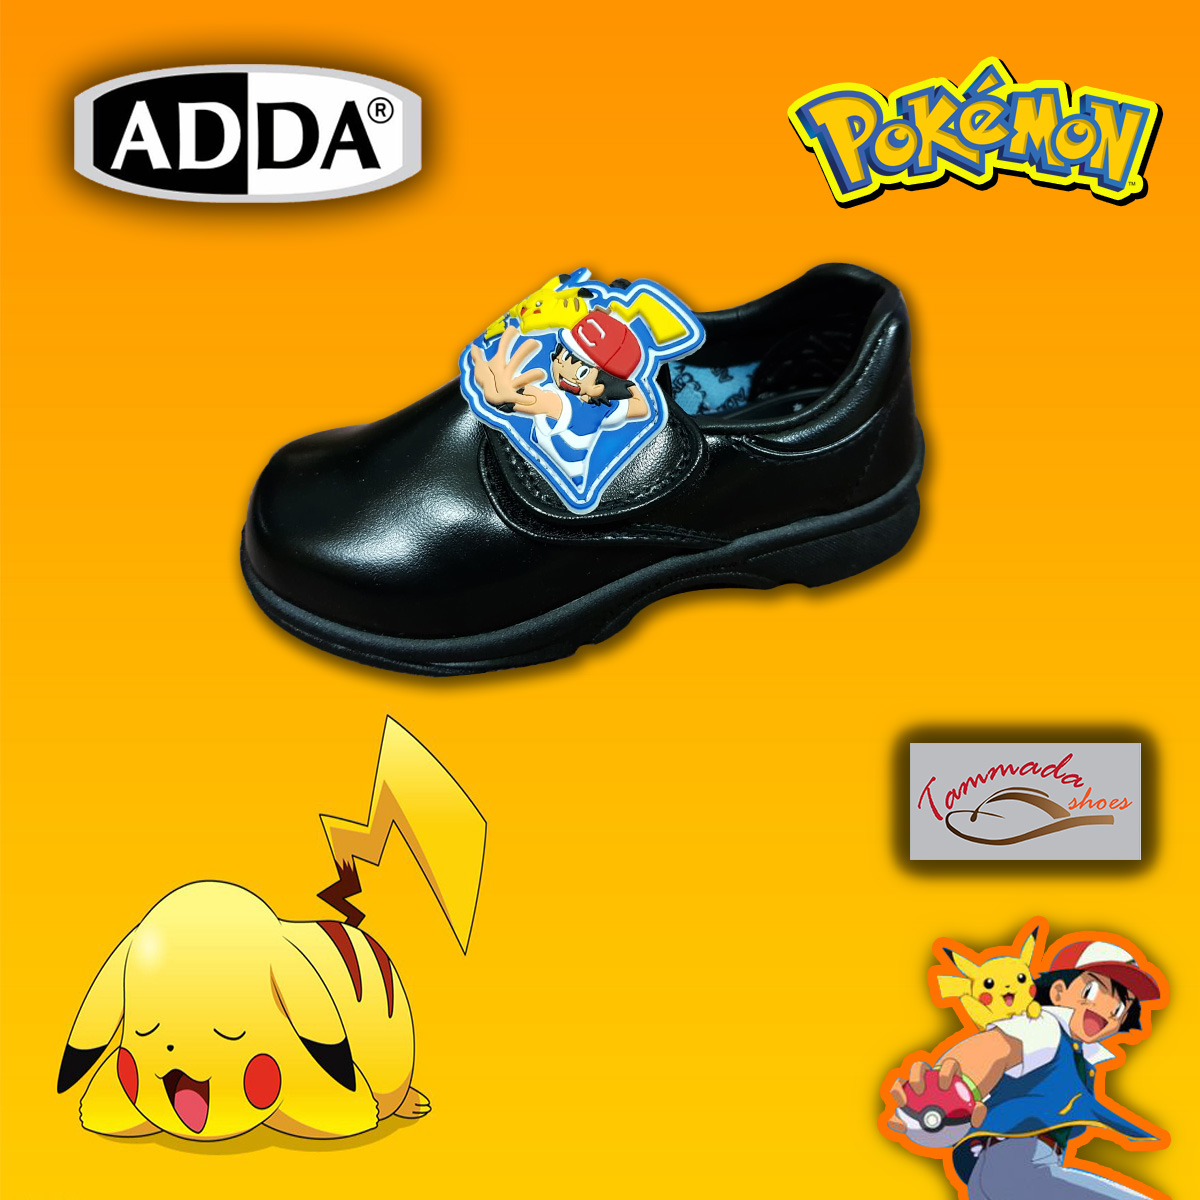 ADDA รองเท้านักเรียนเด็กอนุบาล รองเท้านักเรียนเด็กผู้ชาย ลาย Pokemon โปเกม่อน รหัส 41A10 รองเท้านักเรียนอนุบาลชาย รองเท้าเด็กอนุบาลชาย